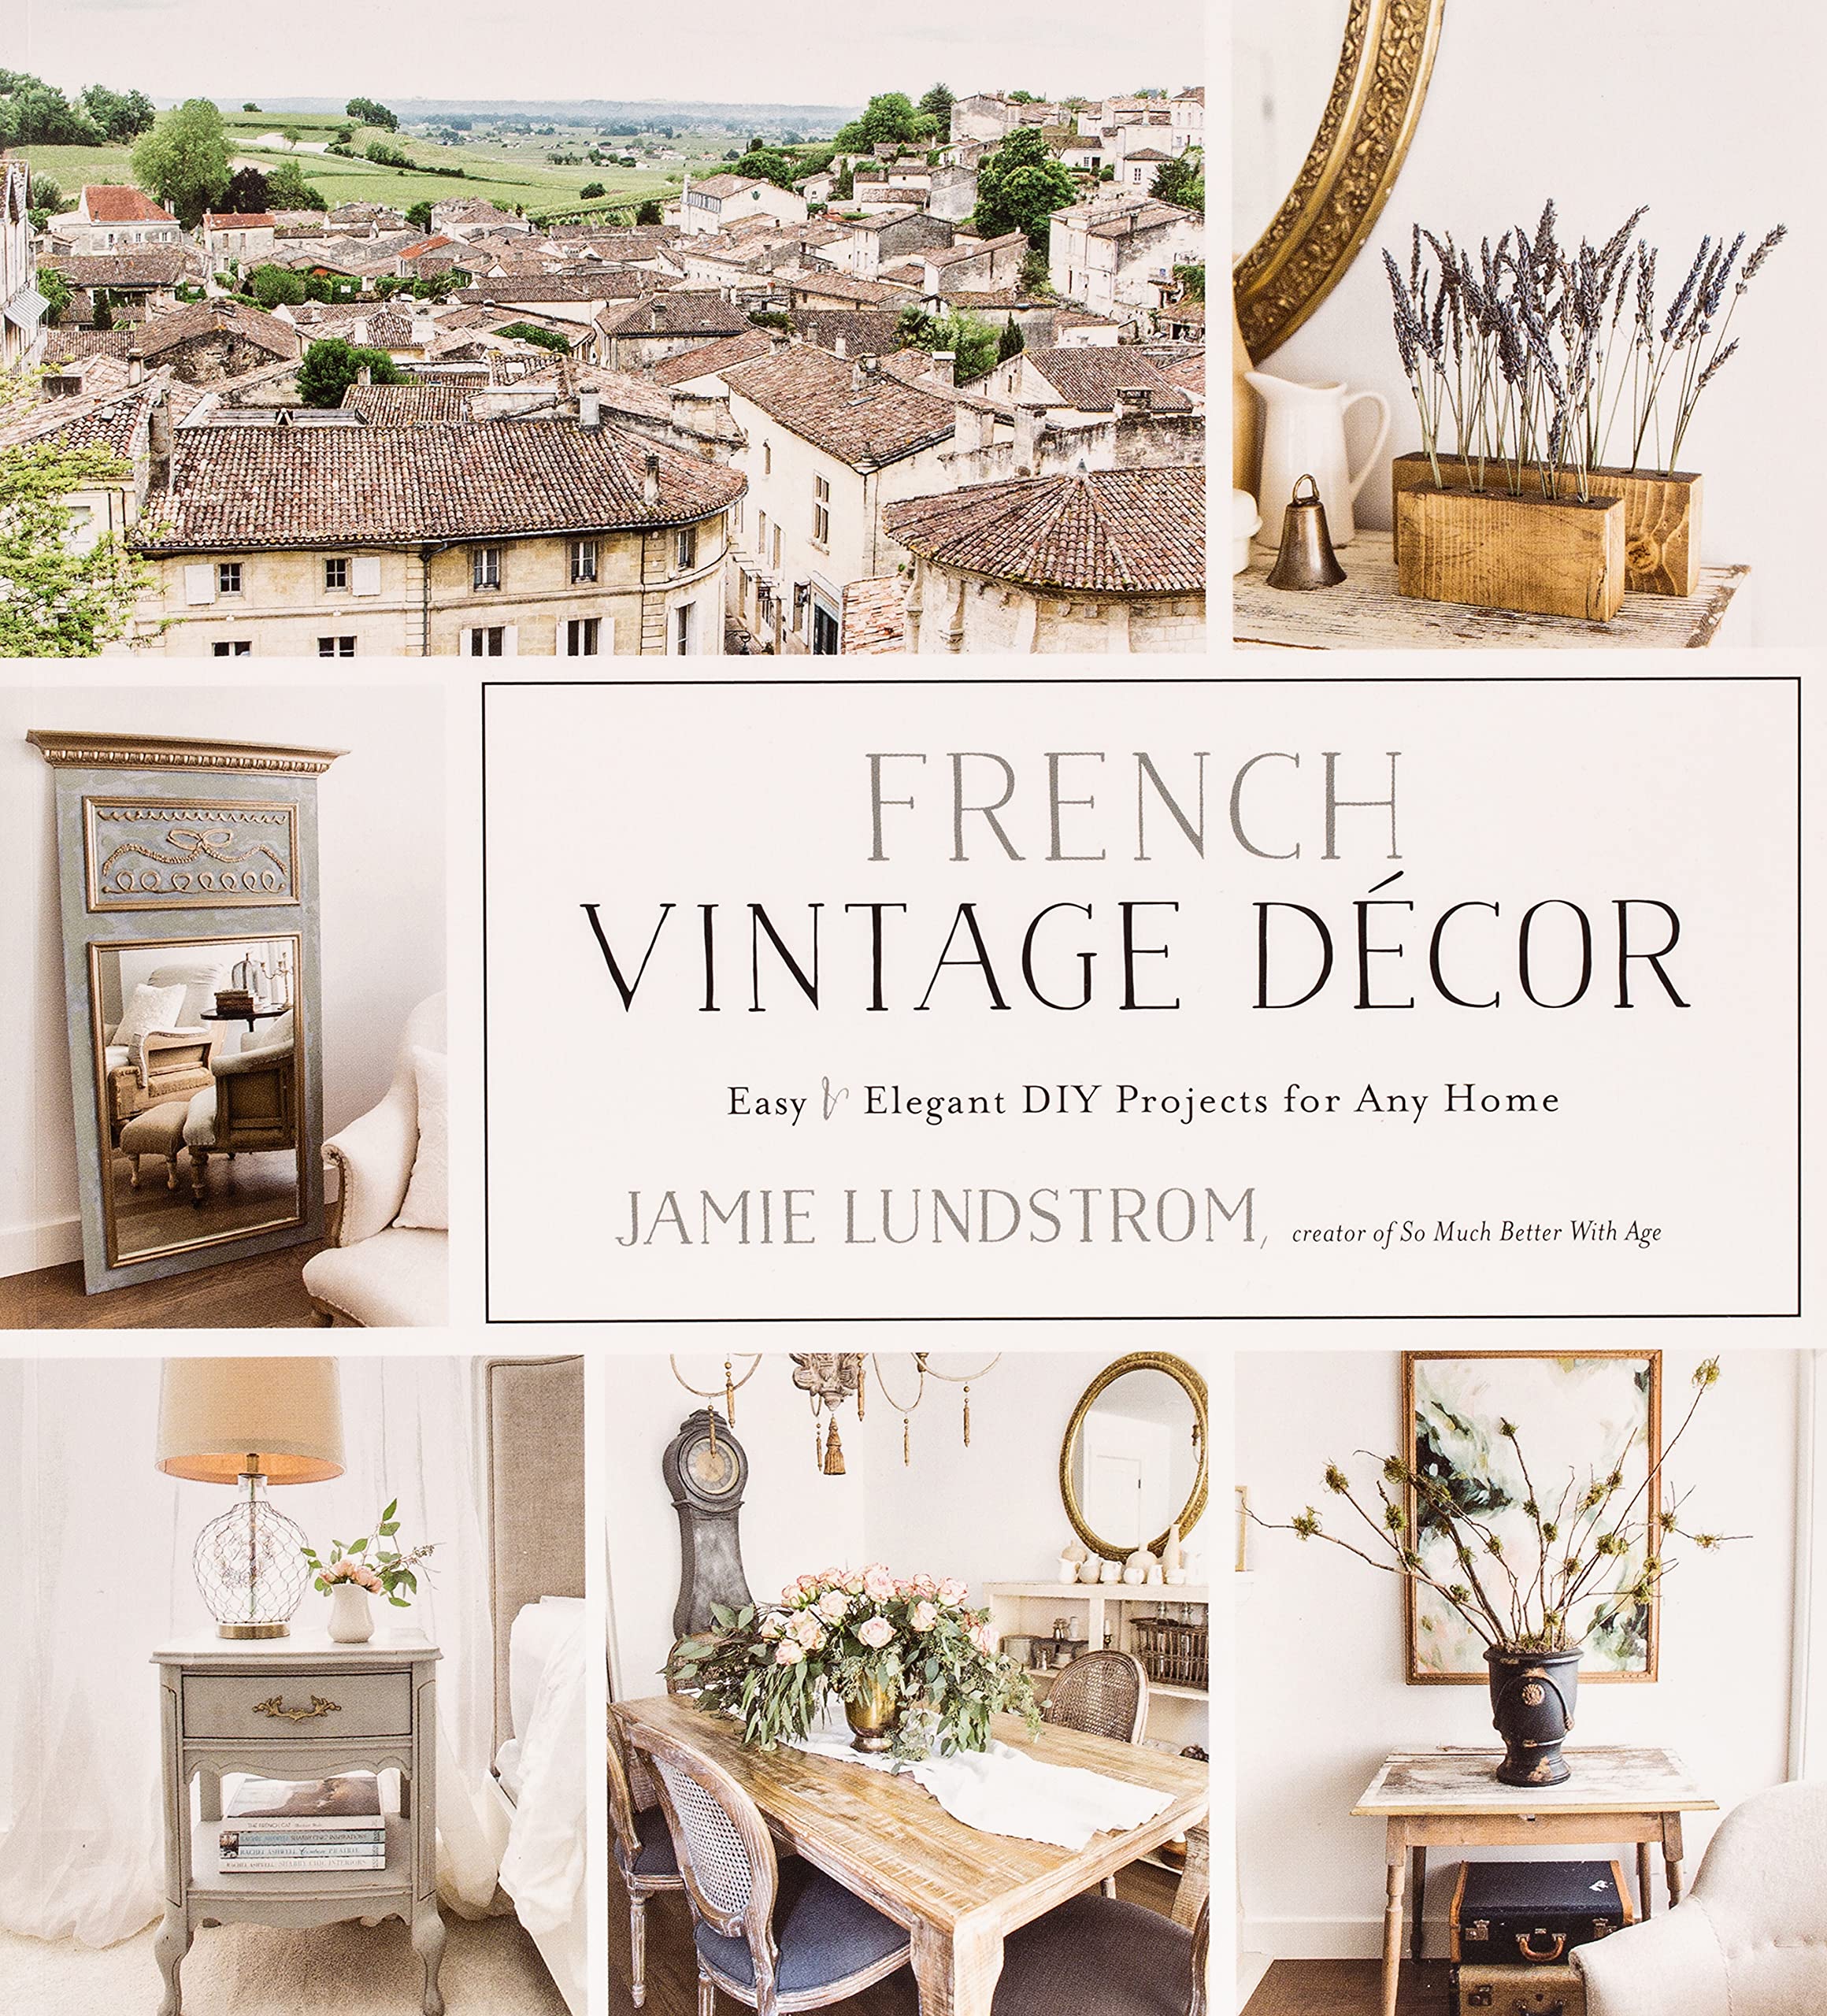 French Vintage Decor - Jamie Lundstrom